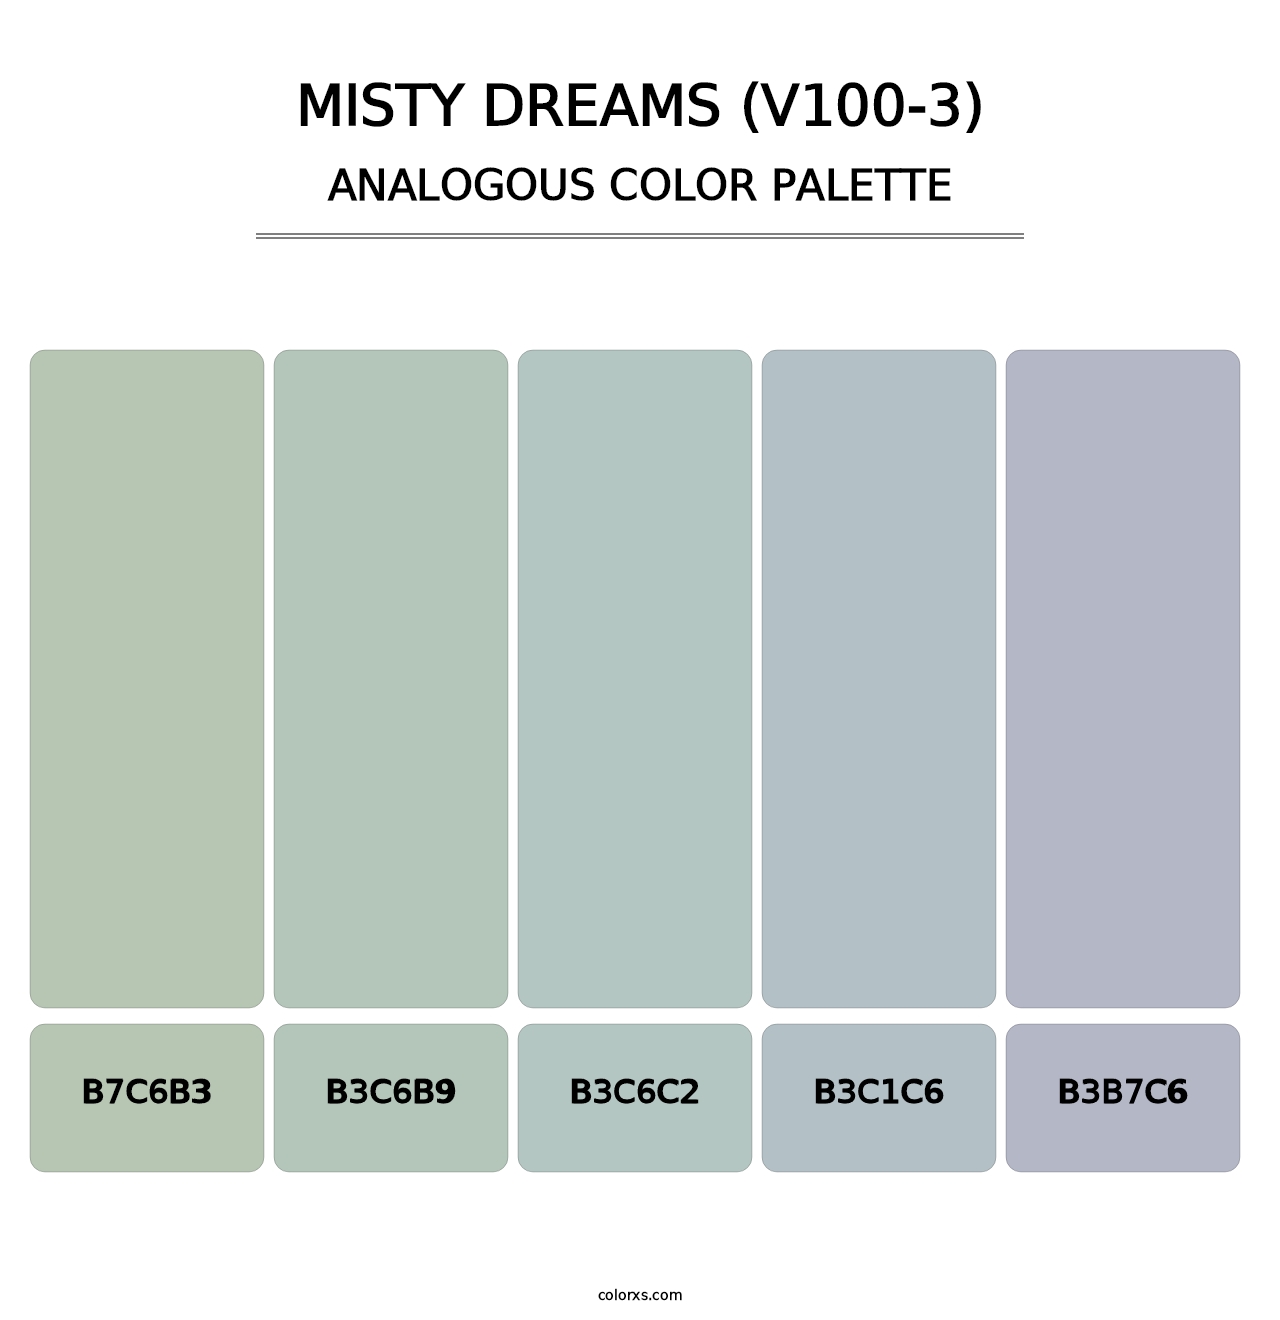 Misty Dreams (V100-3) - Analogous Color Palette